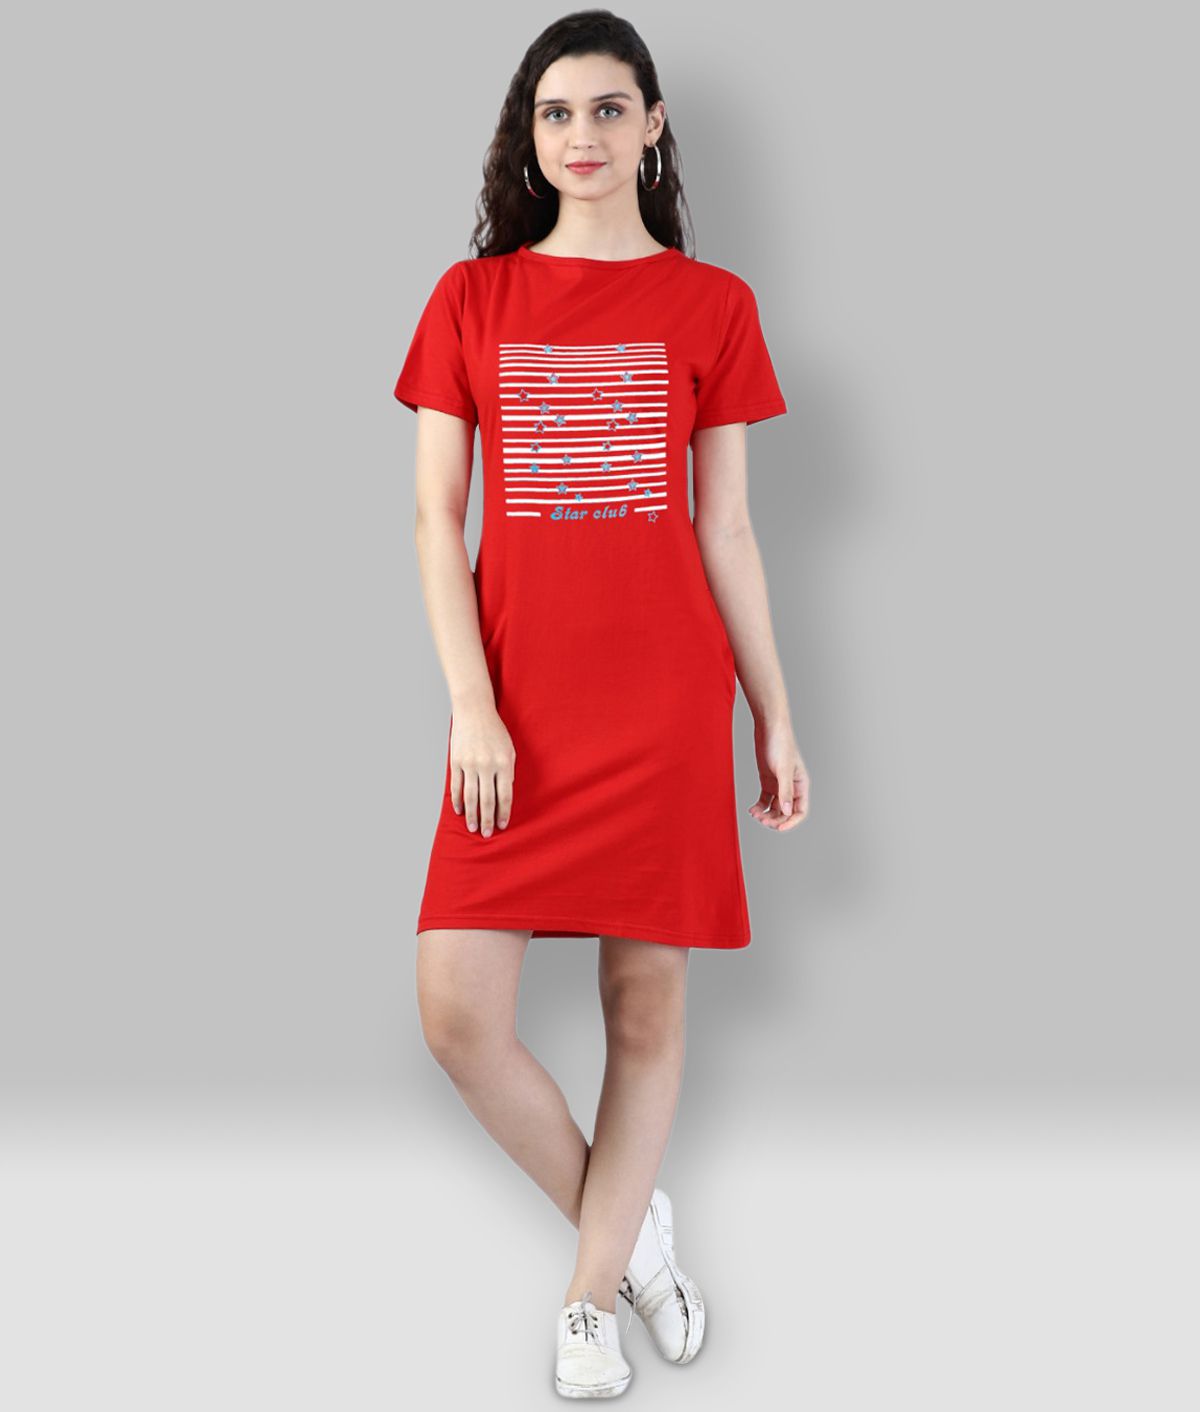 Broadstar Cotton RED Bodycon Dress - Single